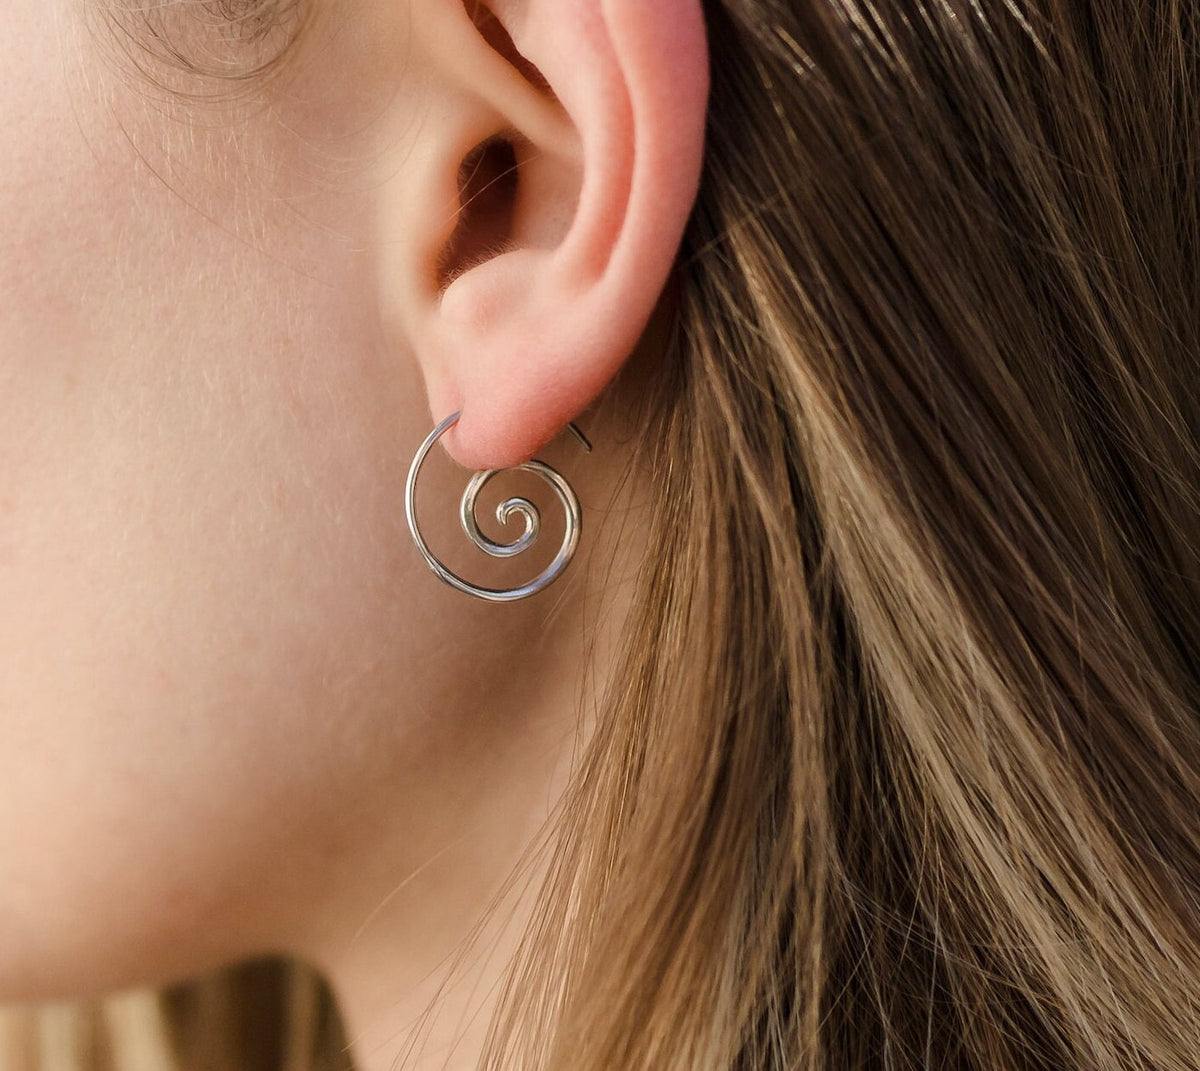 Tiny Gold Spiral Earrings - Sleeper Hoop Earrings - 14K Gold-plated (g236)